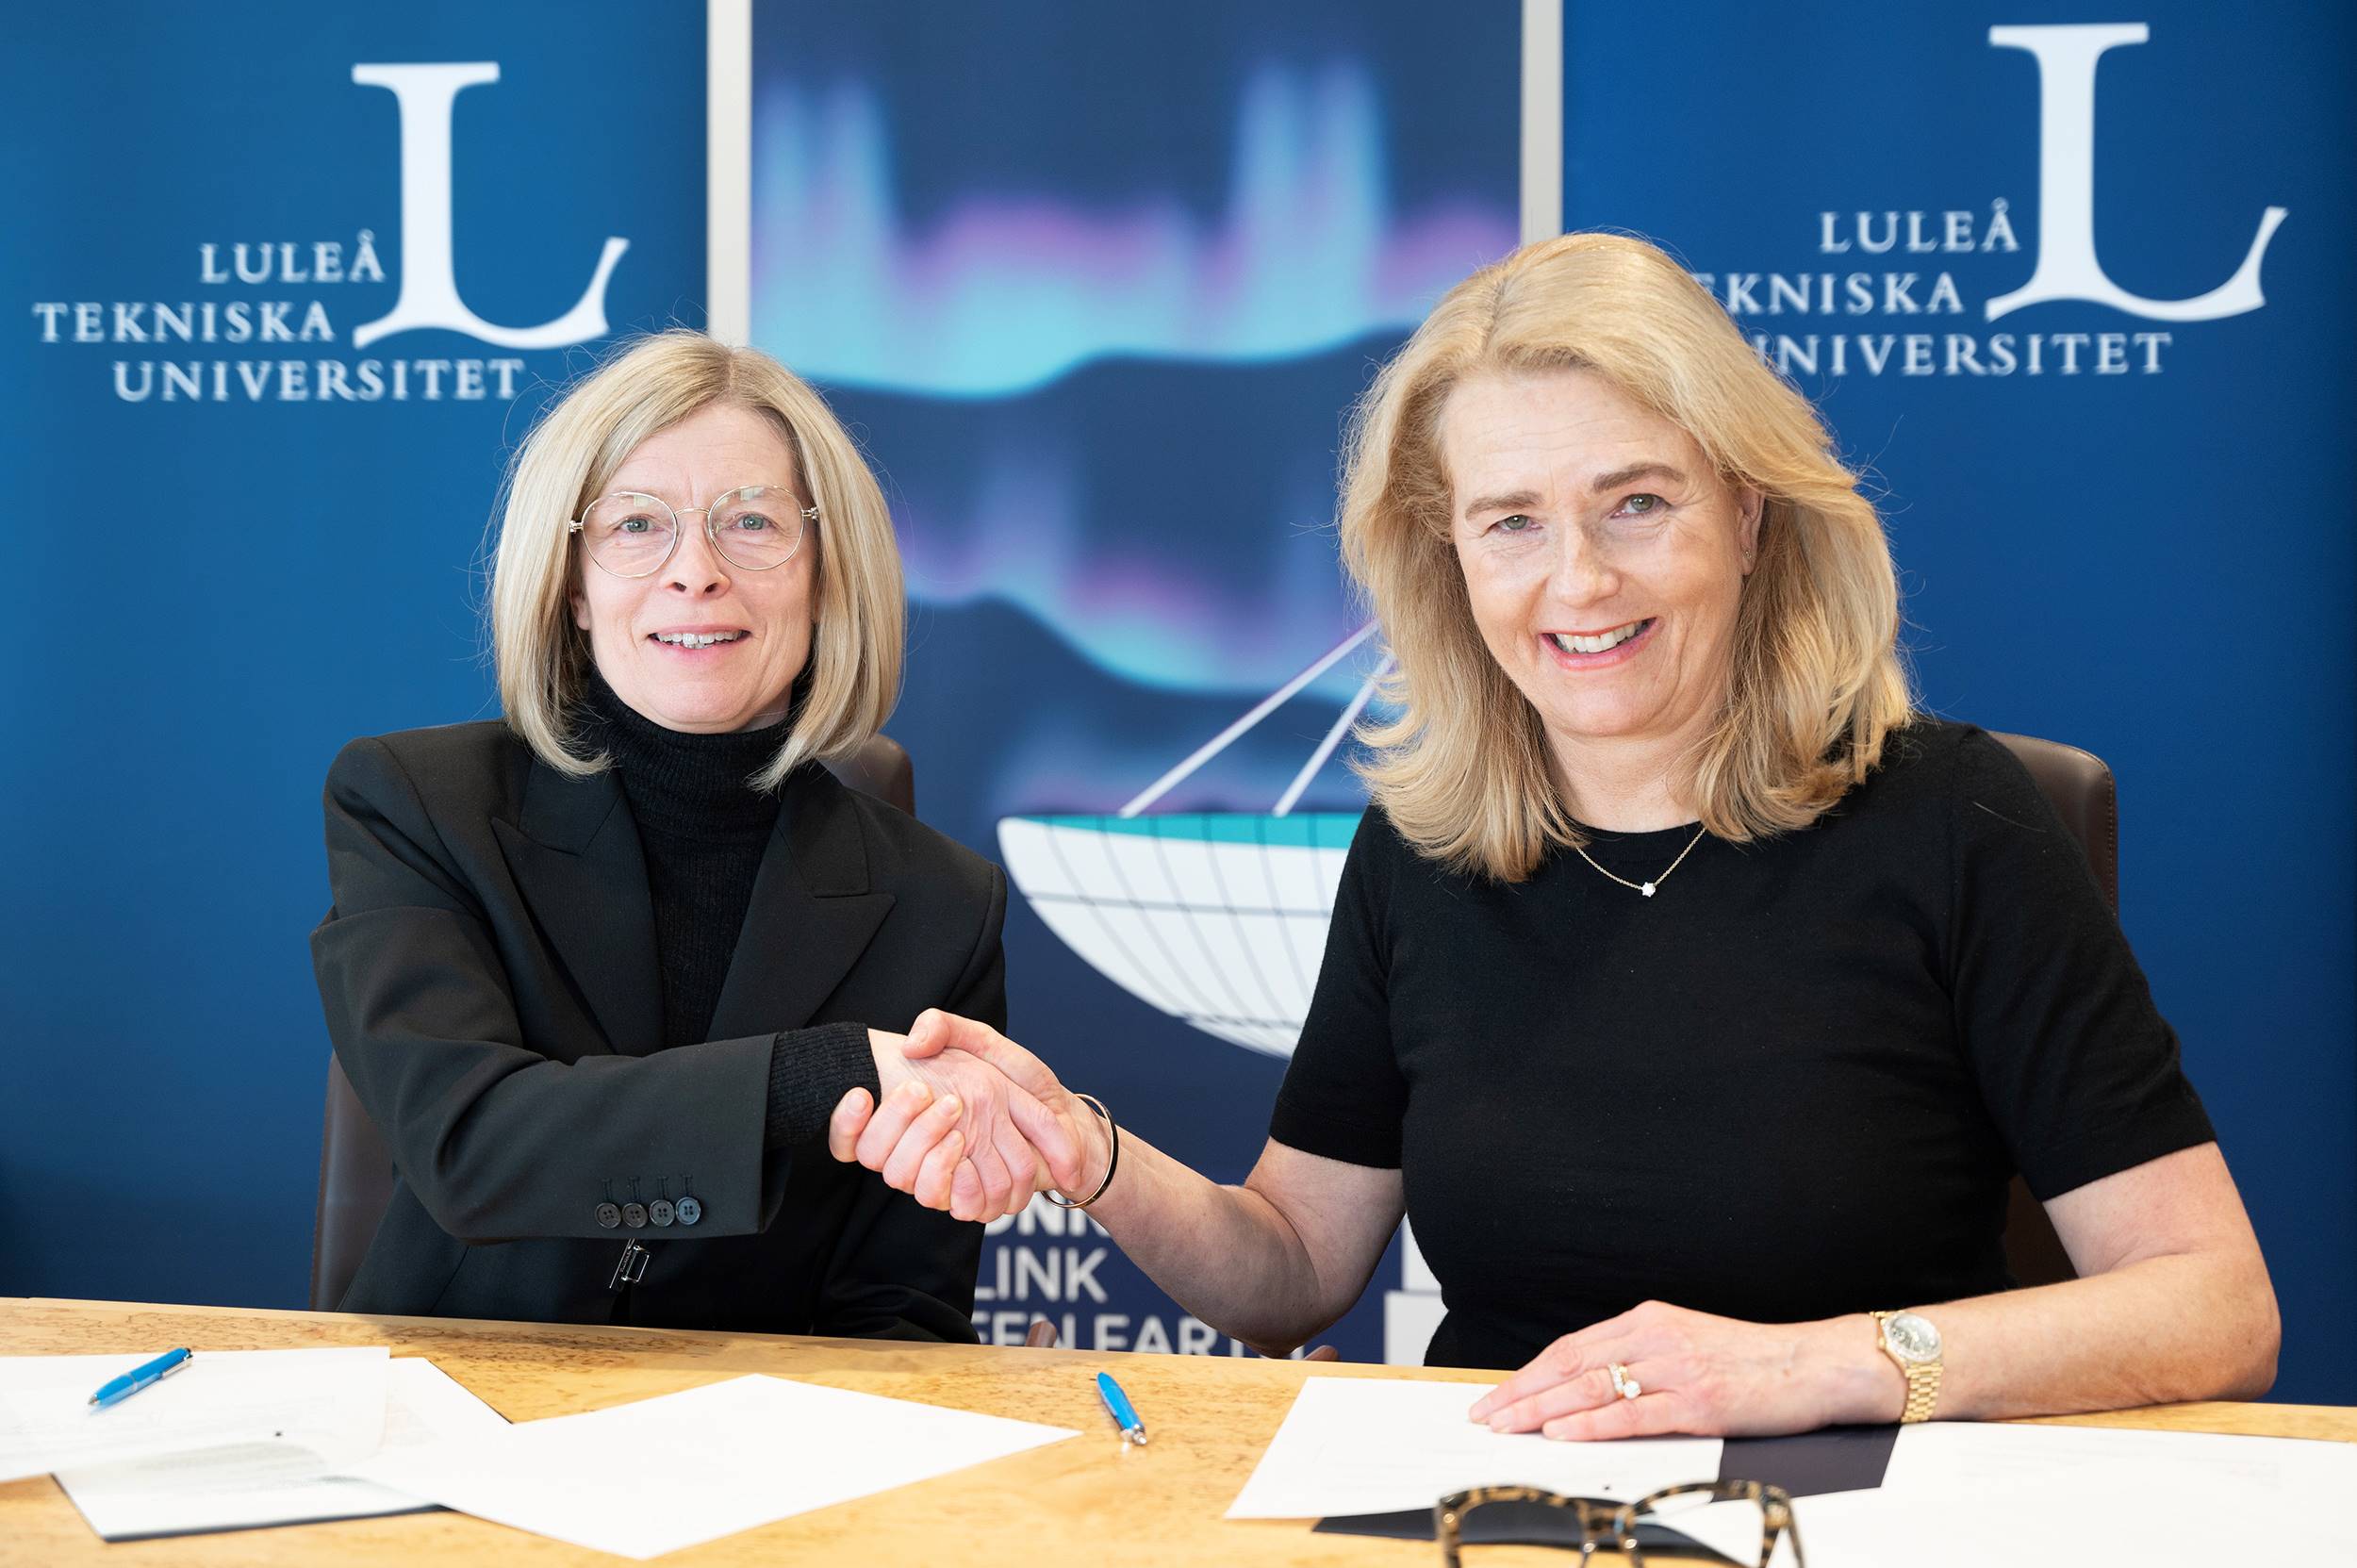 SSC and LTU strengthen space partnership